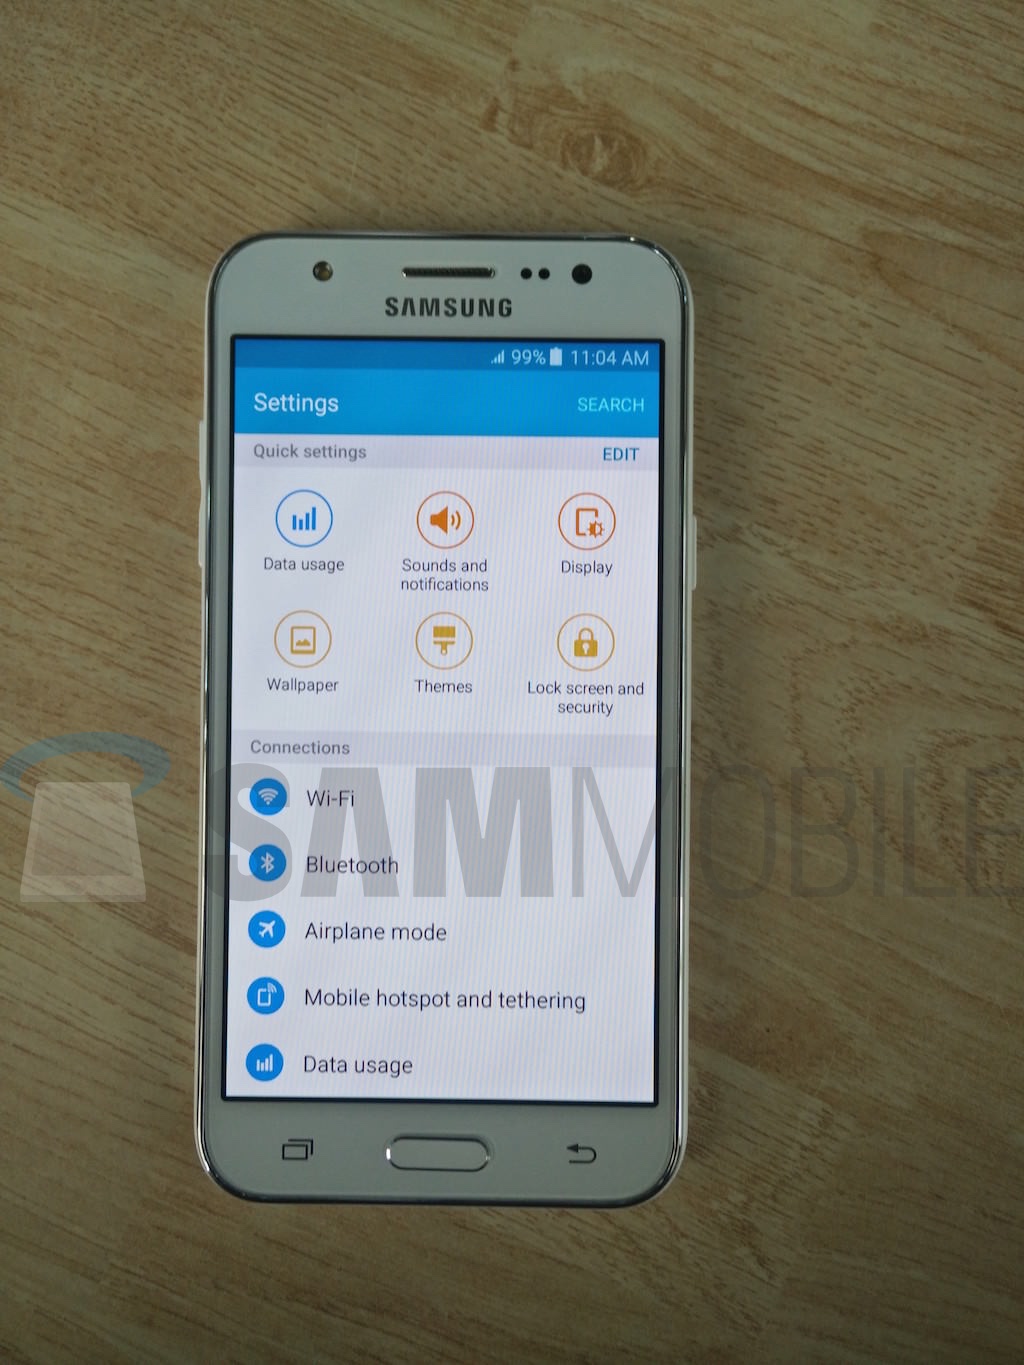 Gambar Samsung Galaxy J5 dan Spesifikasi - Bursahpsamsung.com